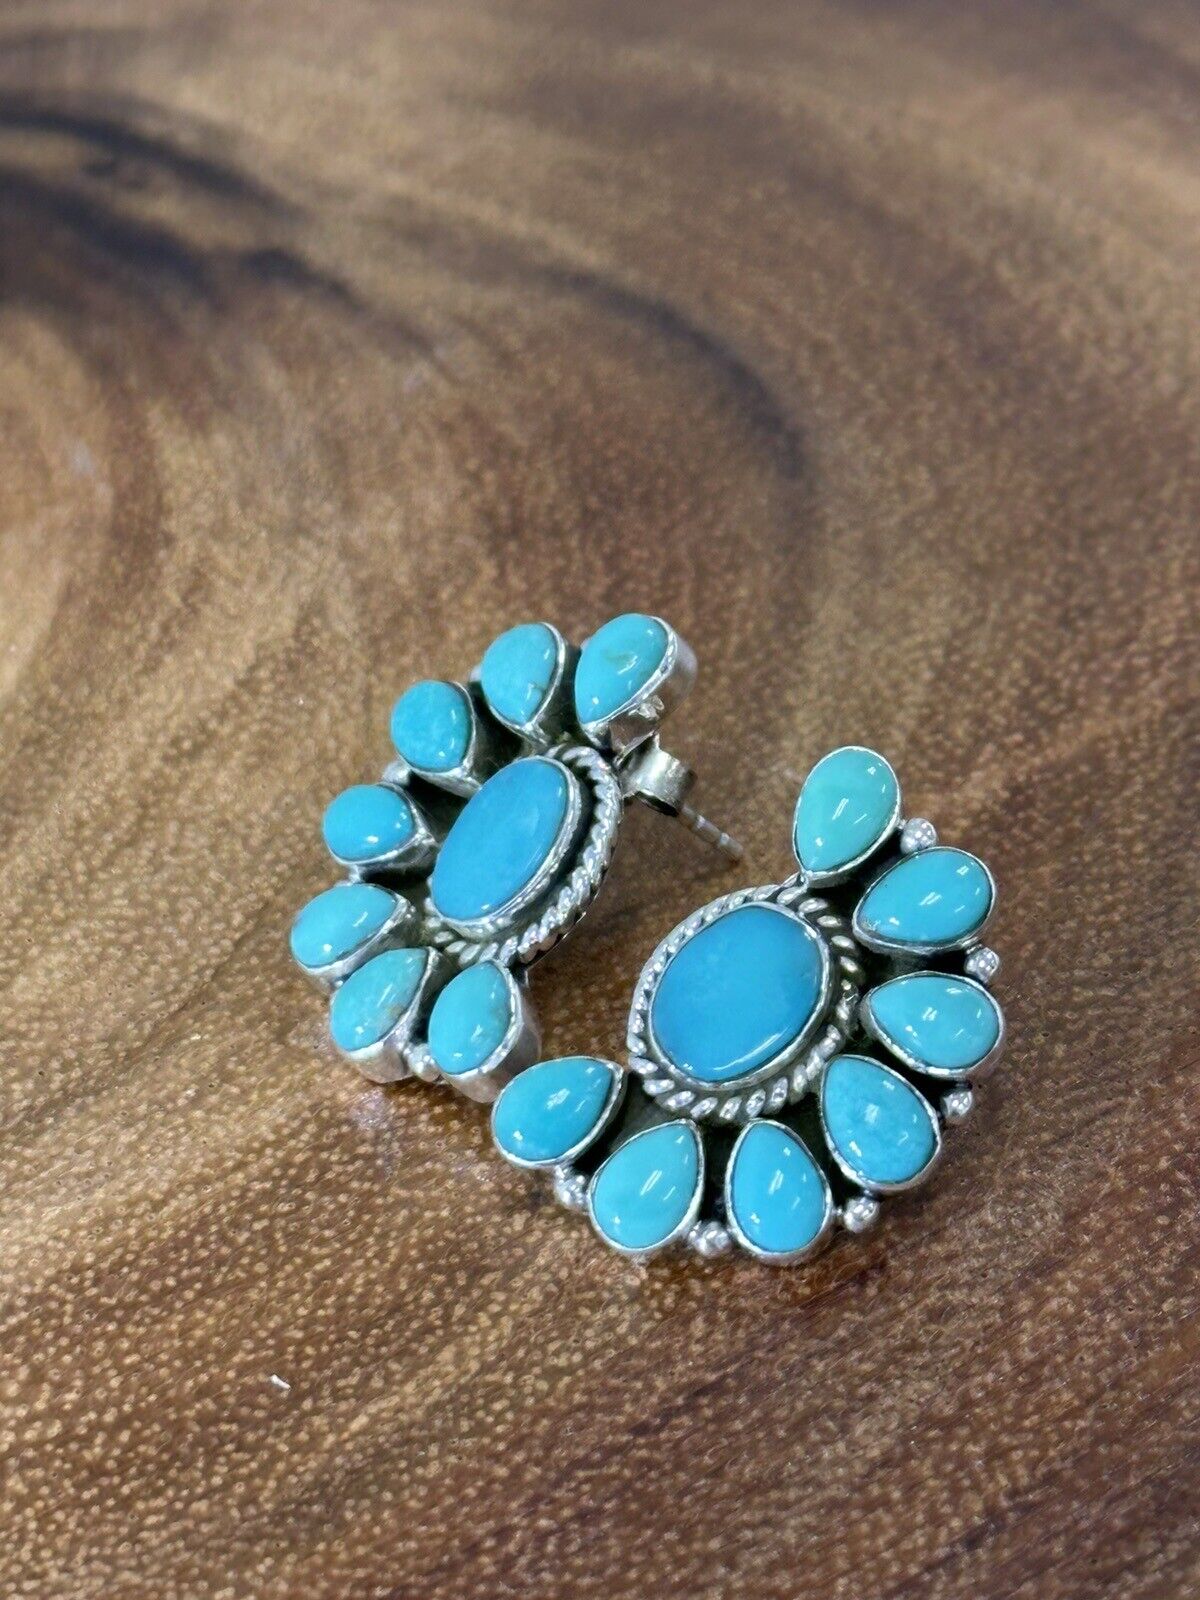 Turquoise Half Flower Earrings 925 Sterling Silver Closed Backs